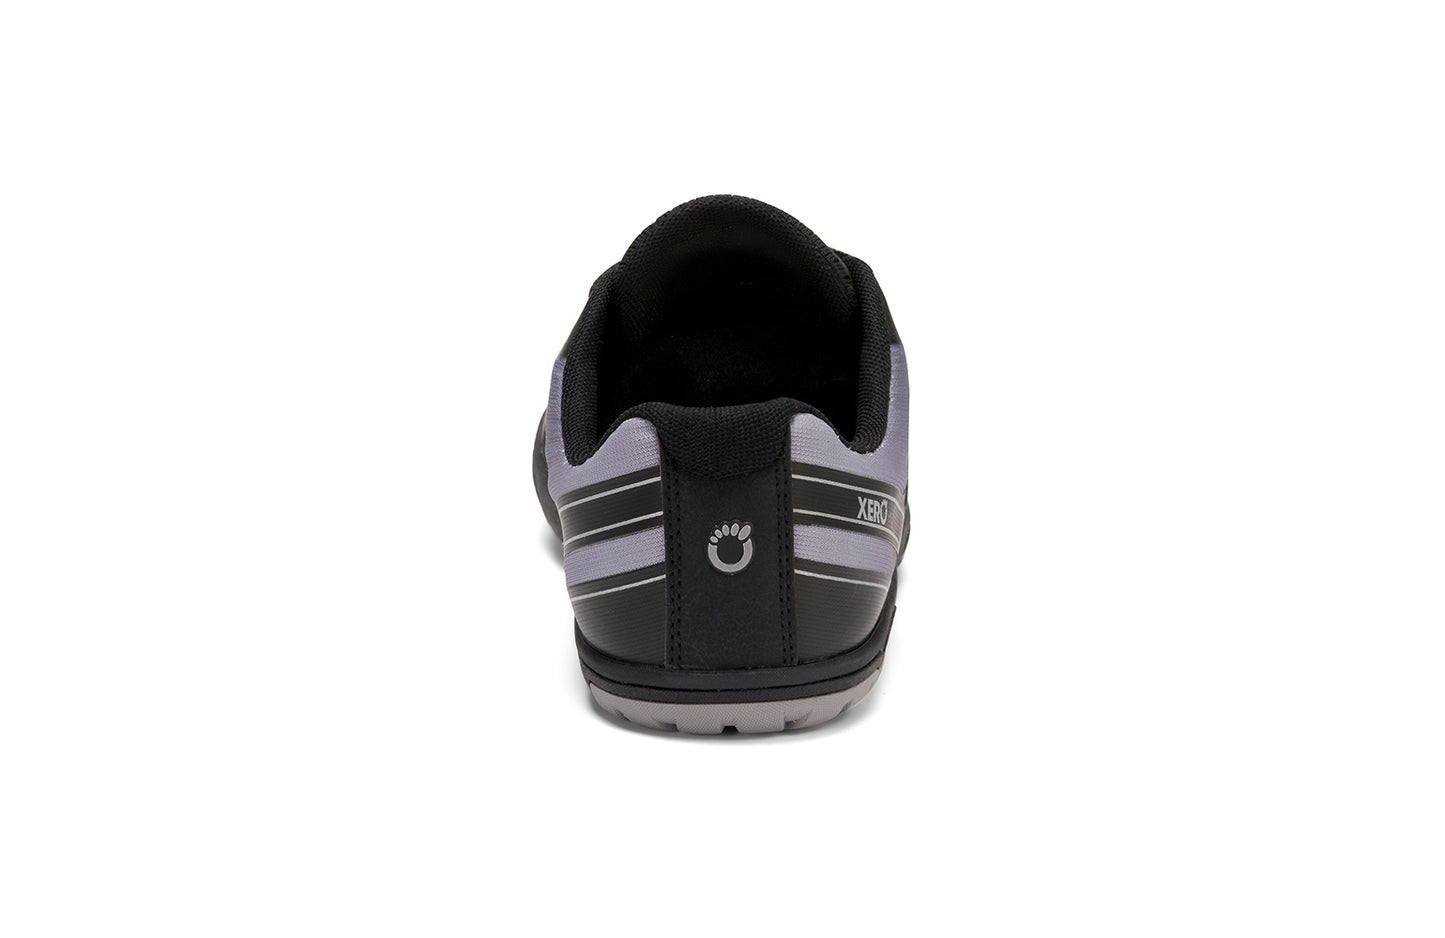 Xero Shoes HFS II Mens - Asphalt / Alloy